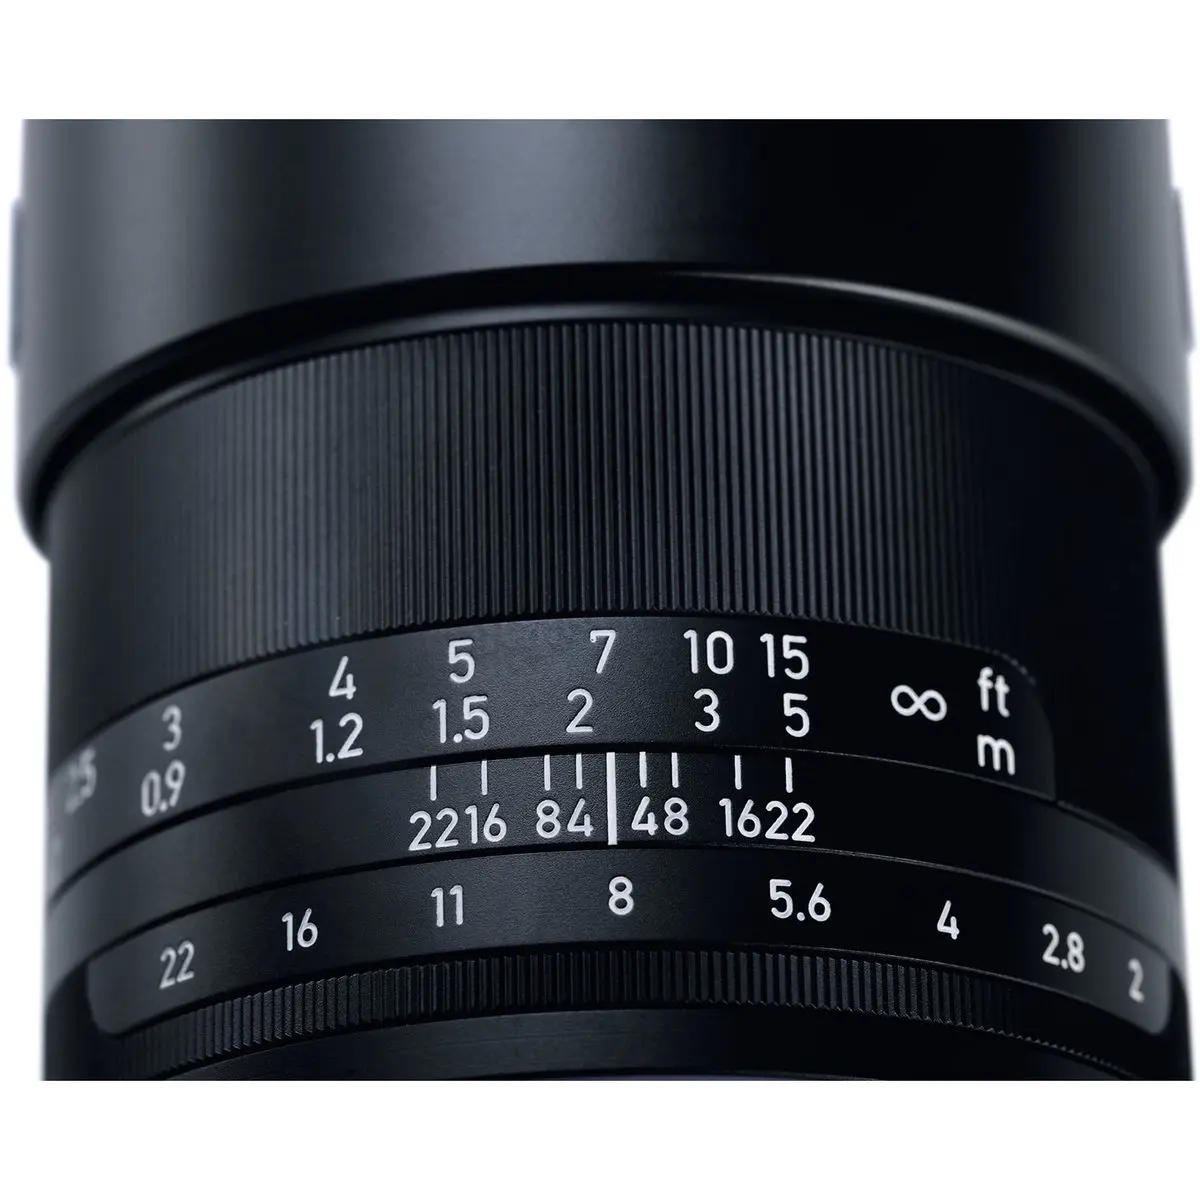 9. Carl Zeiss Loxia 50mm f/2 Planar T* (Sony E-Mount) Lens